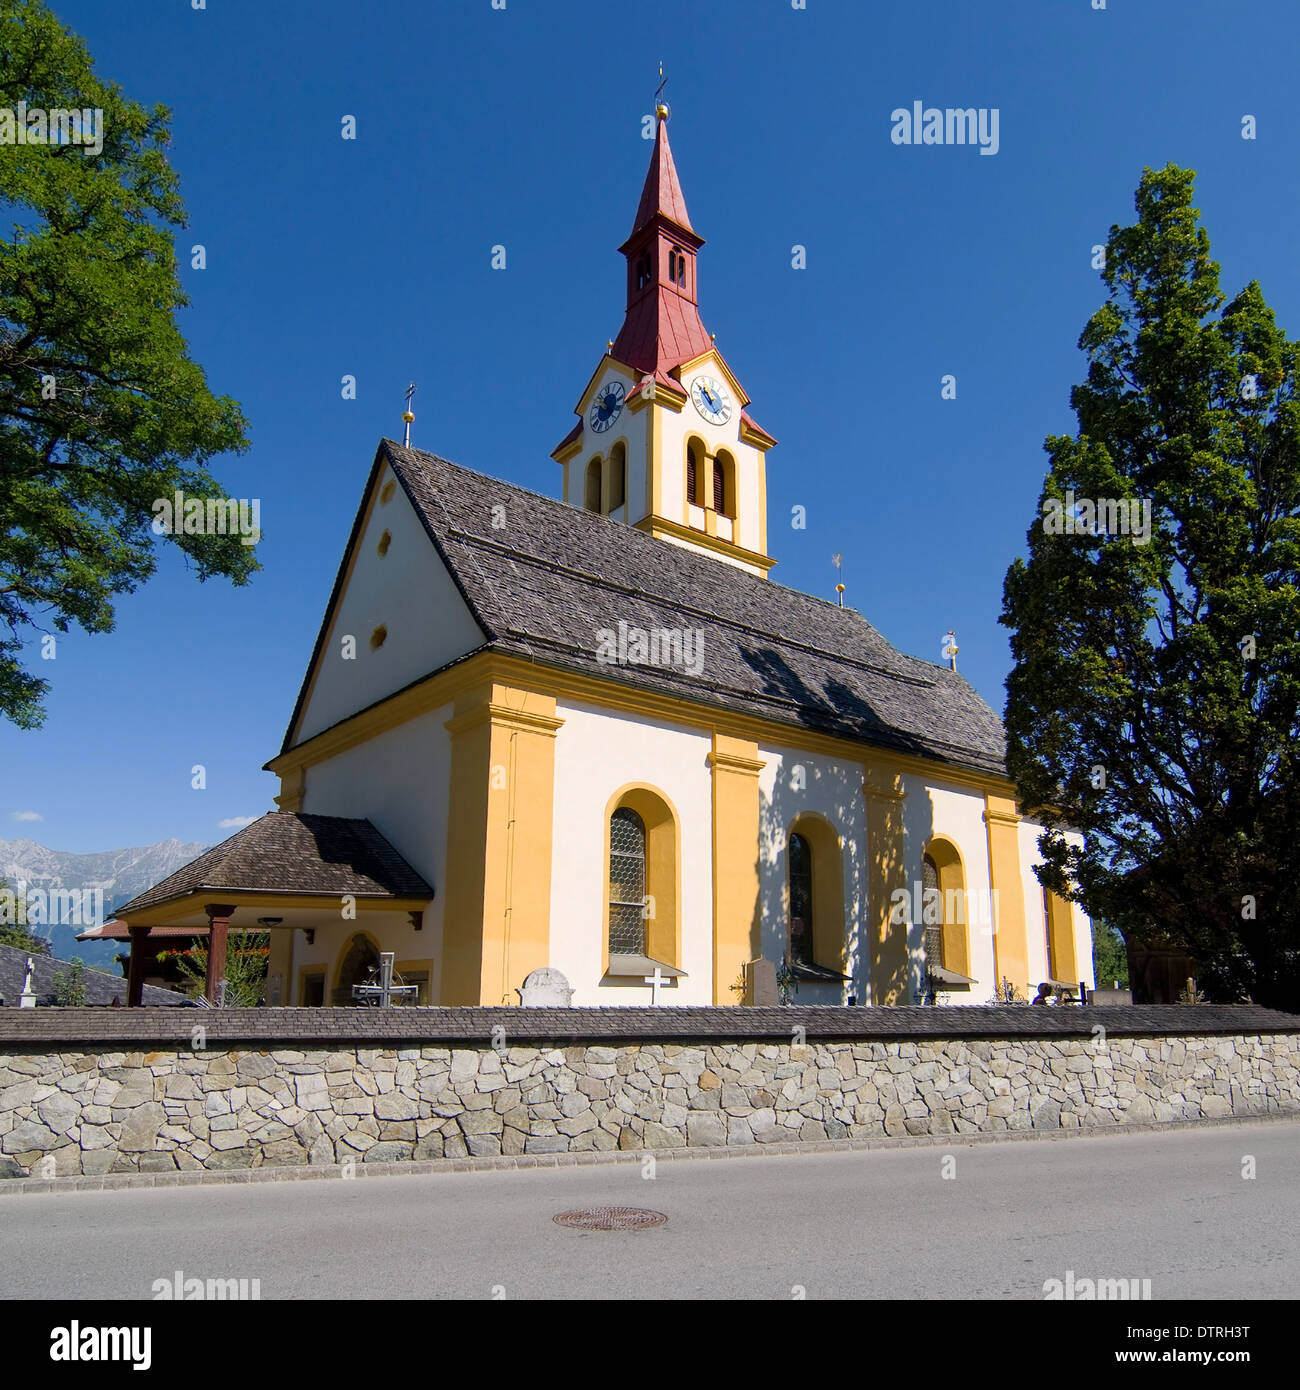 Parish church in the village of Igls, Innsbruck, Tyrol, Austria. Stock Photo